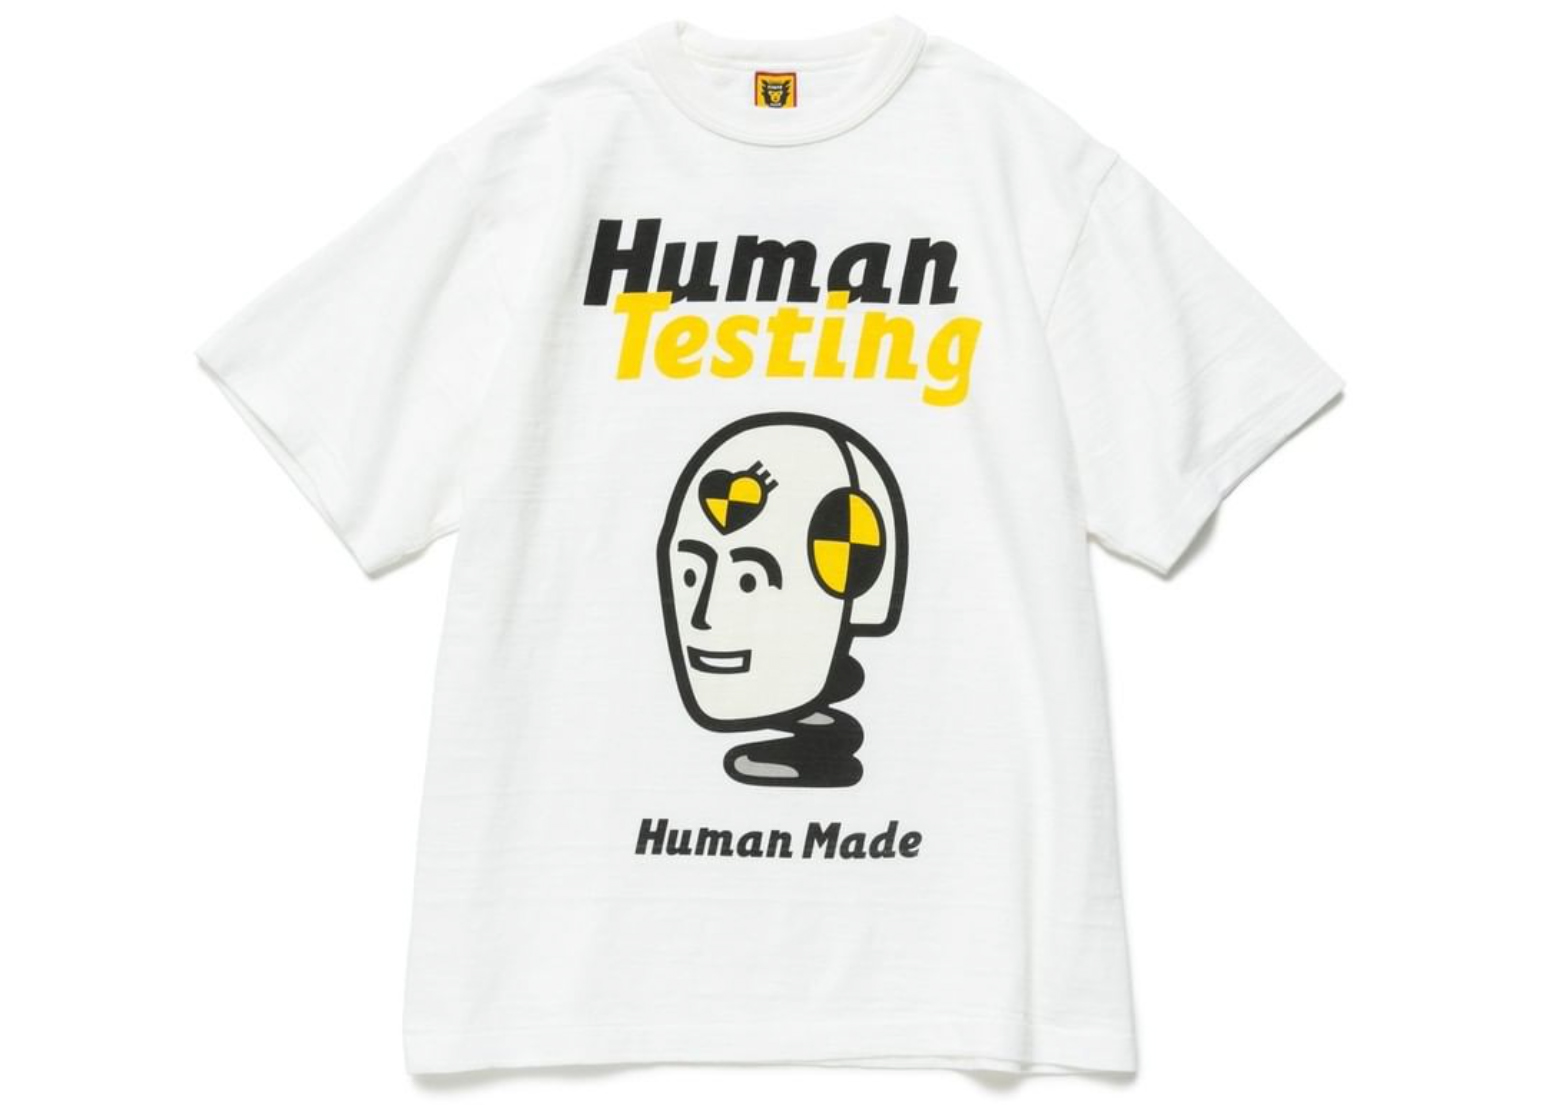 Human Made x Asap Rocky Human Testing T-Shirt White